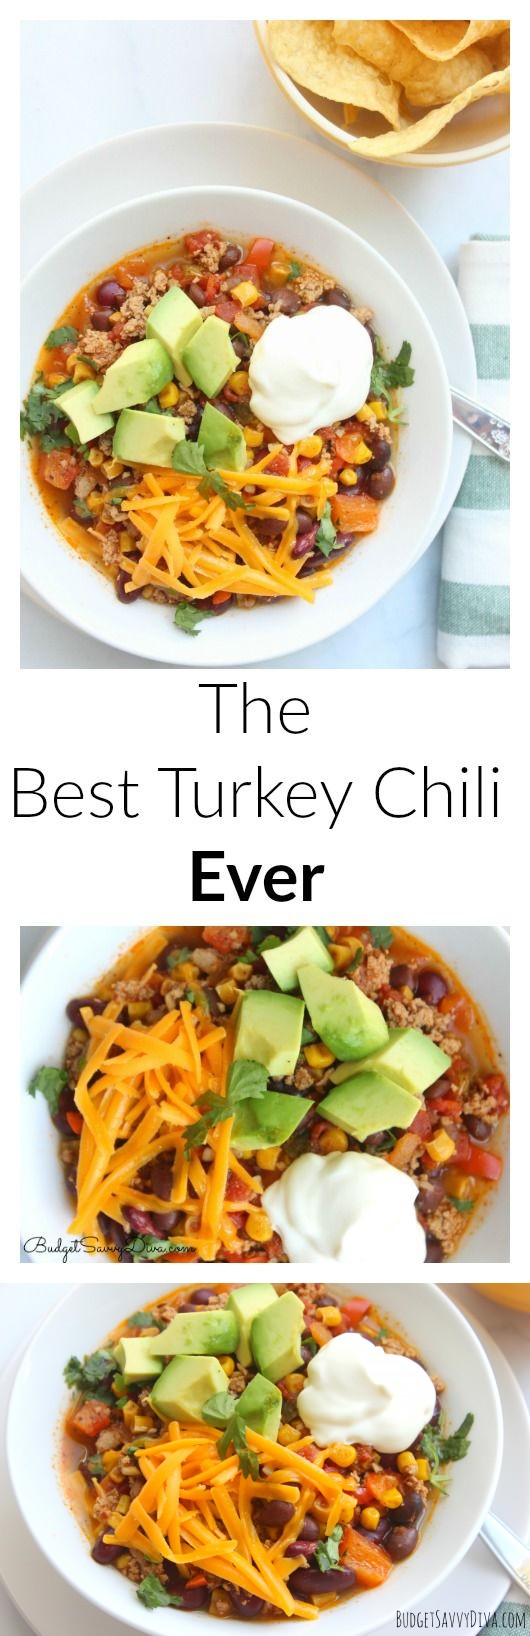 The Best Turkey Chili Ever